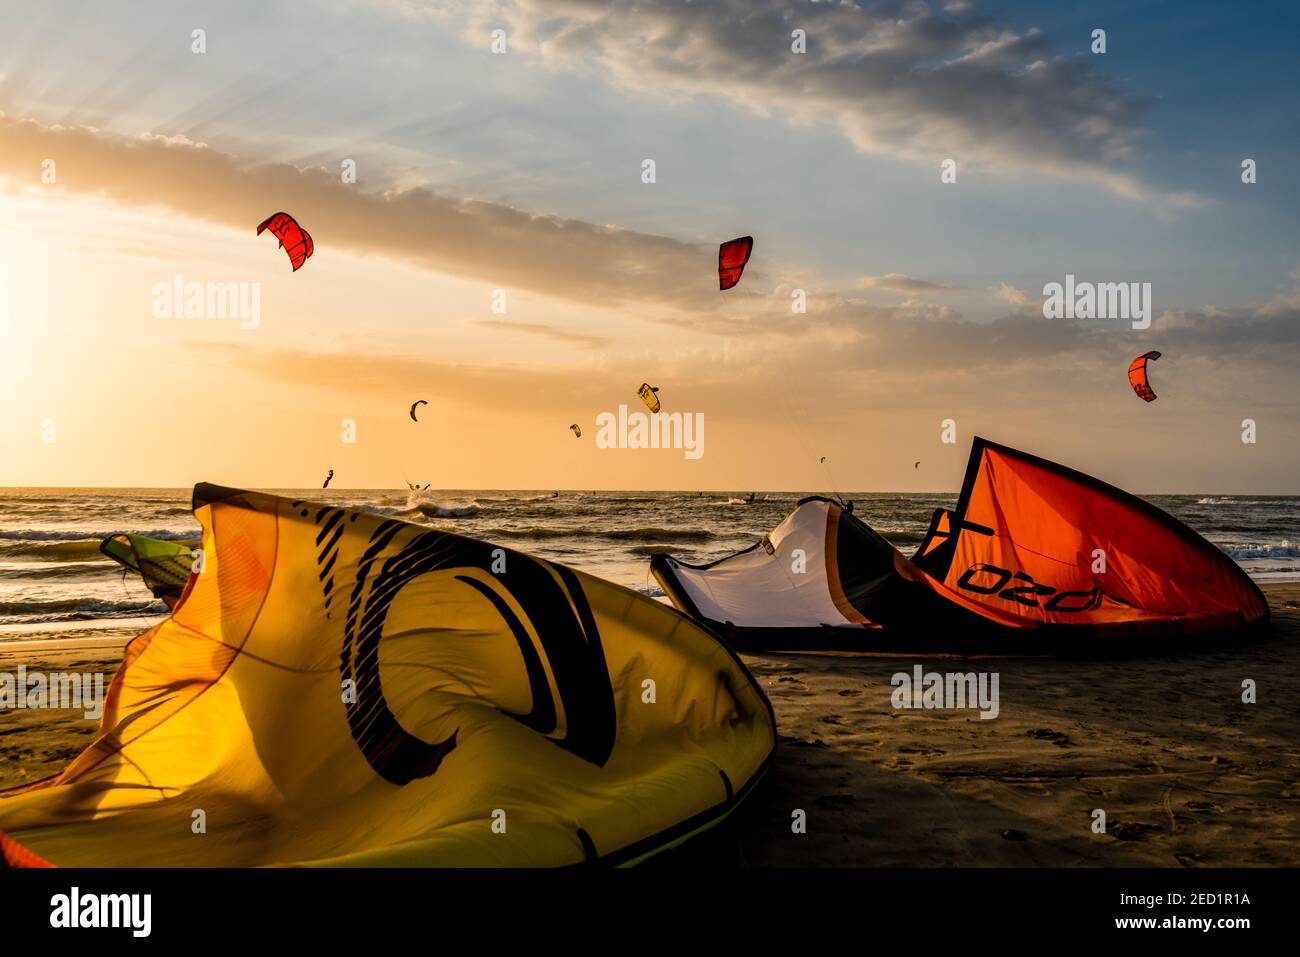 Freeride kitesurfing wallpaper: Could this be a Walk of Shame? | Kite  surfing, Surfing, Kiteboarding